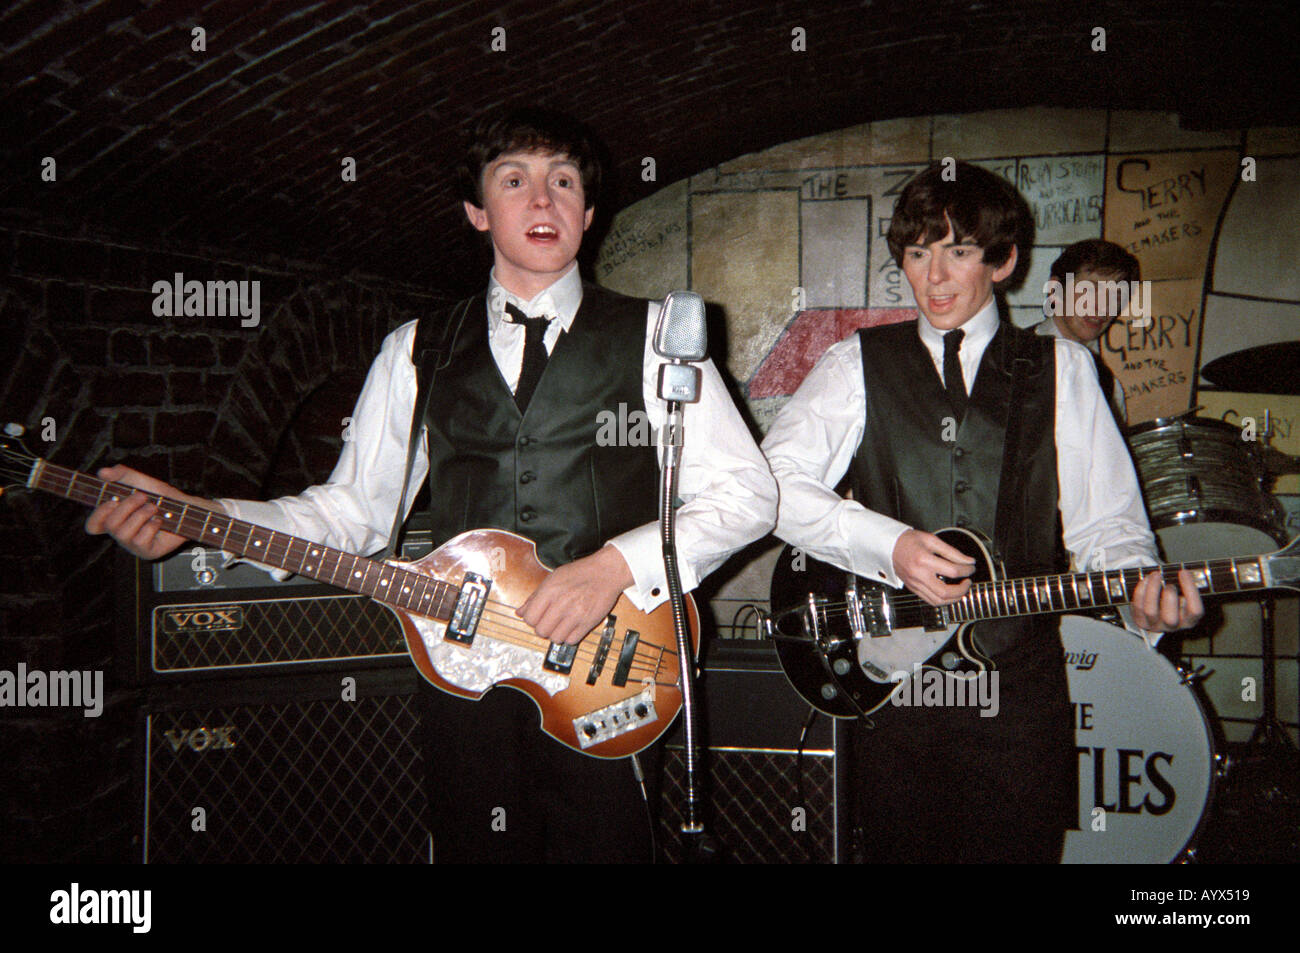 Les figures de cire des Beatles à Rock Circus Trocadero Piccadilly Circus London England UK Banque D'Images